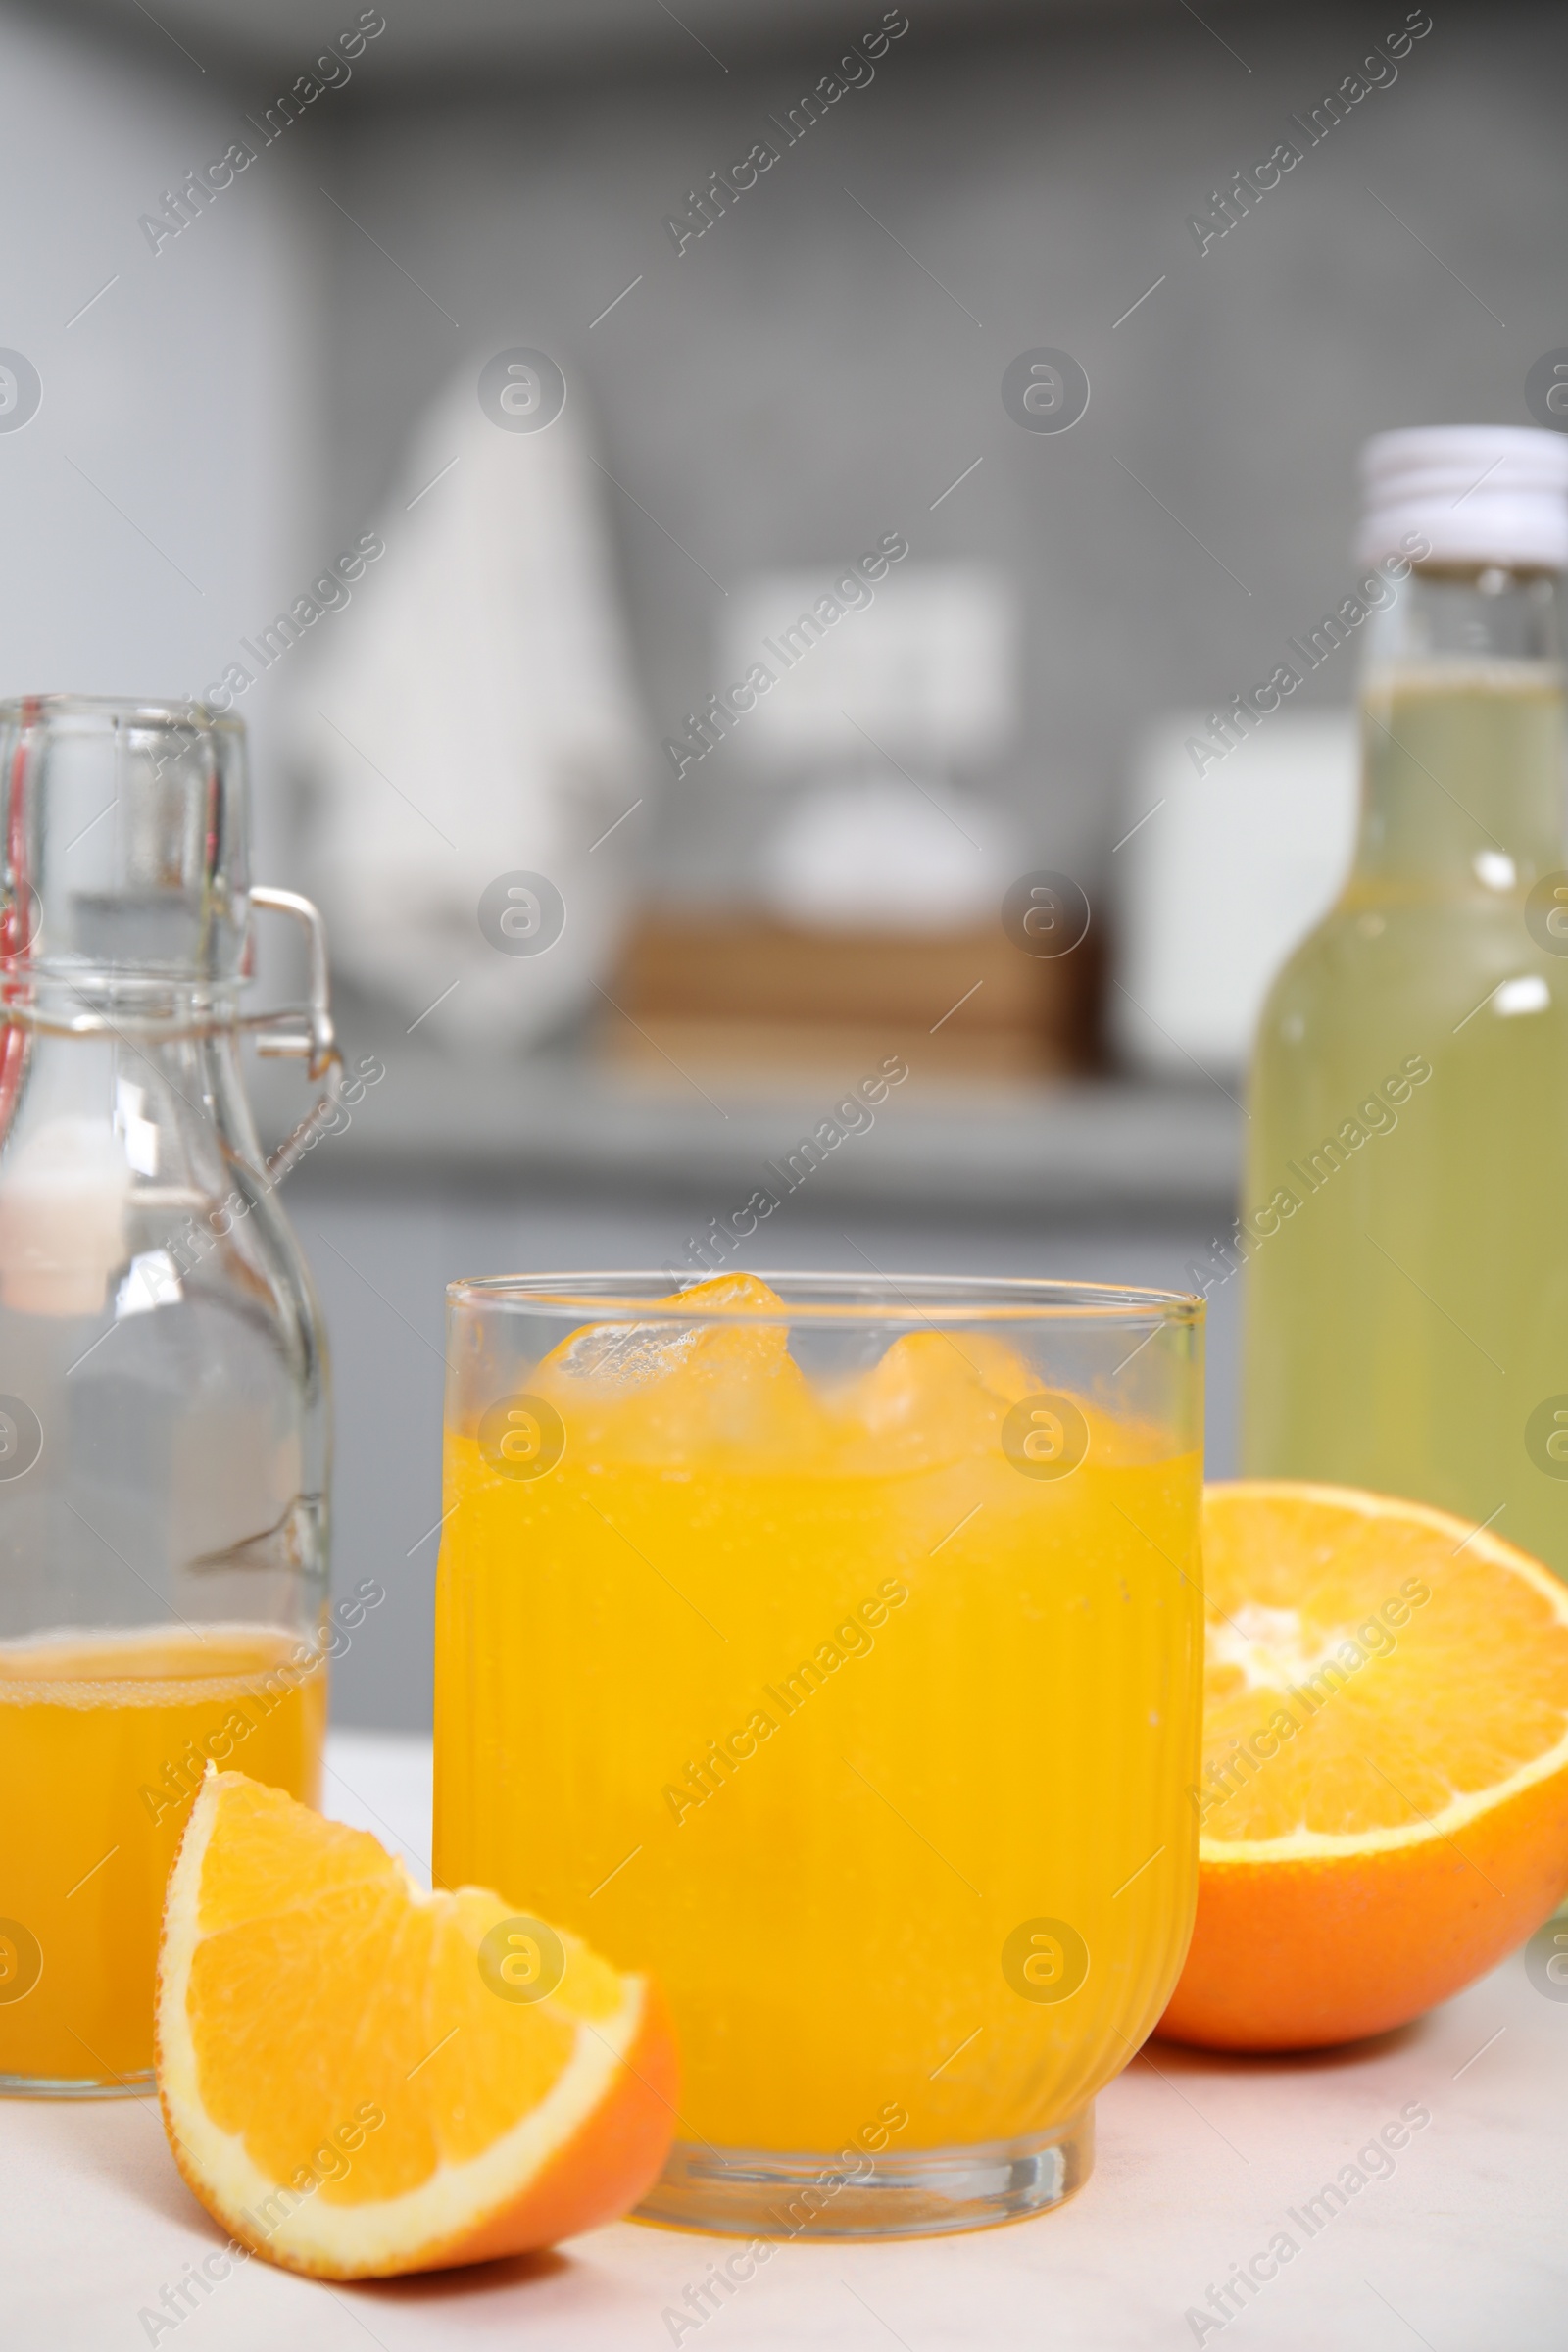 Photo of Tasty kombucha in glass, bottles and fresh orange on white table